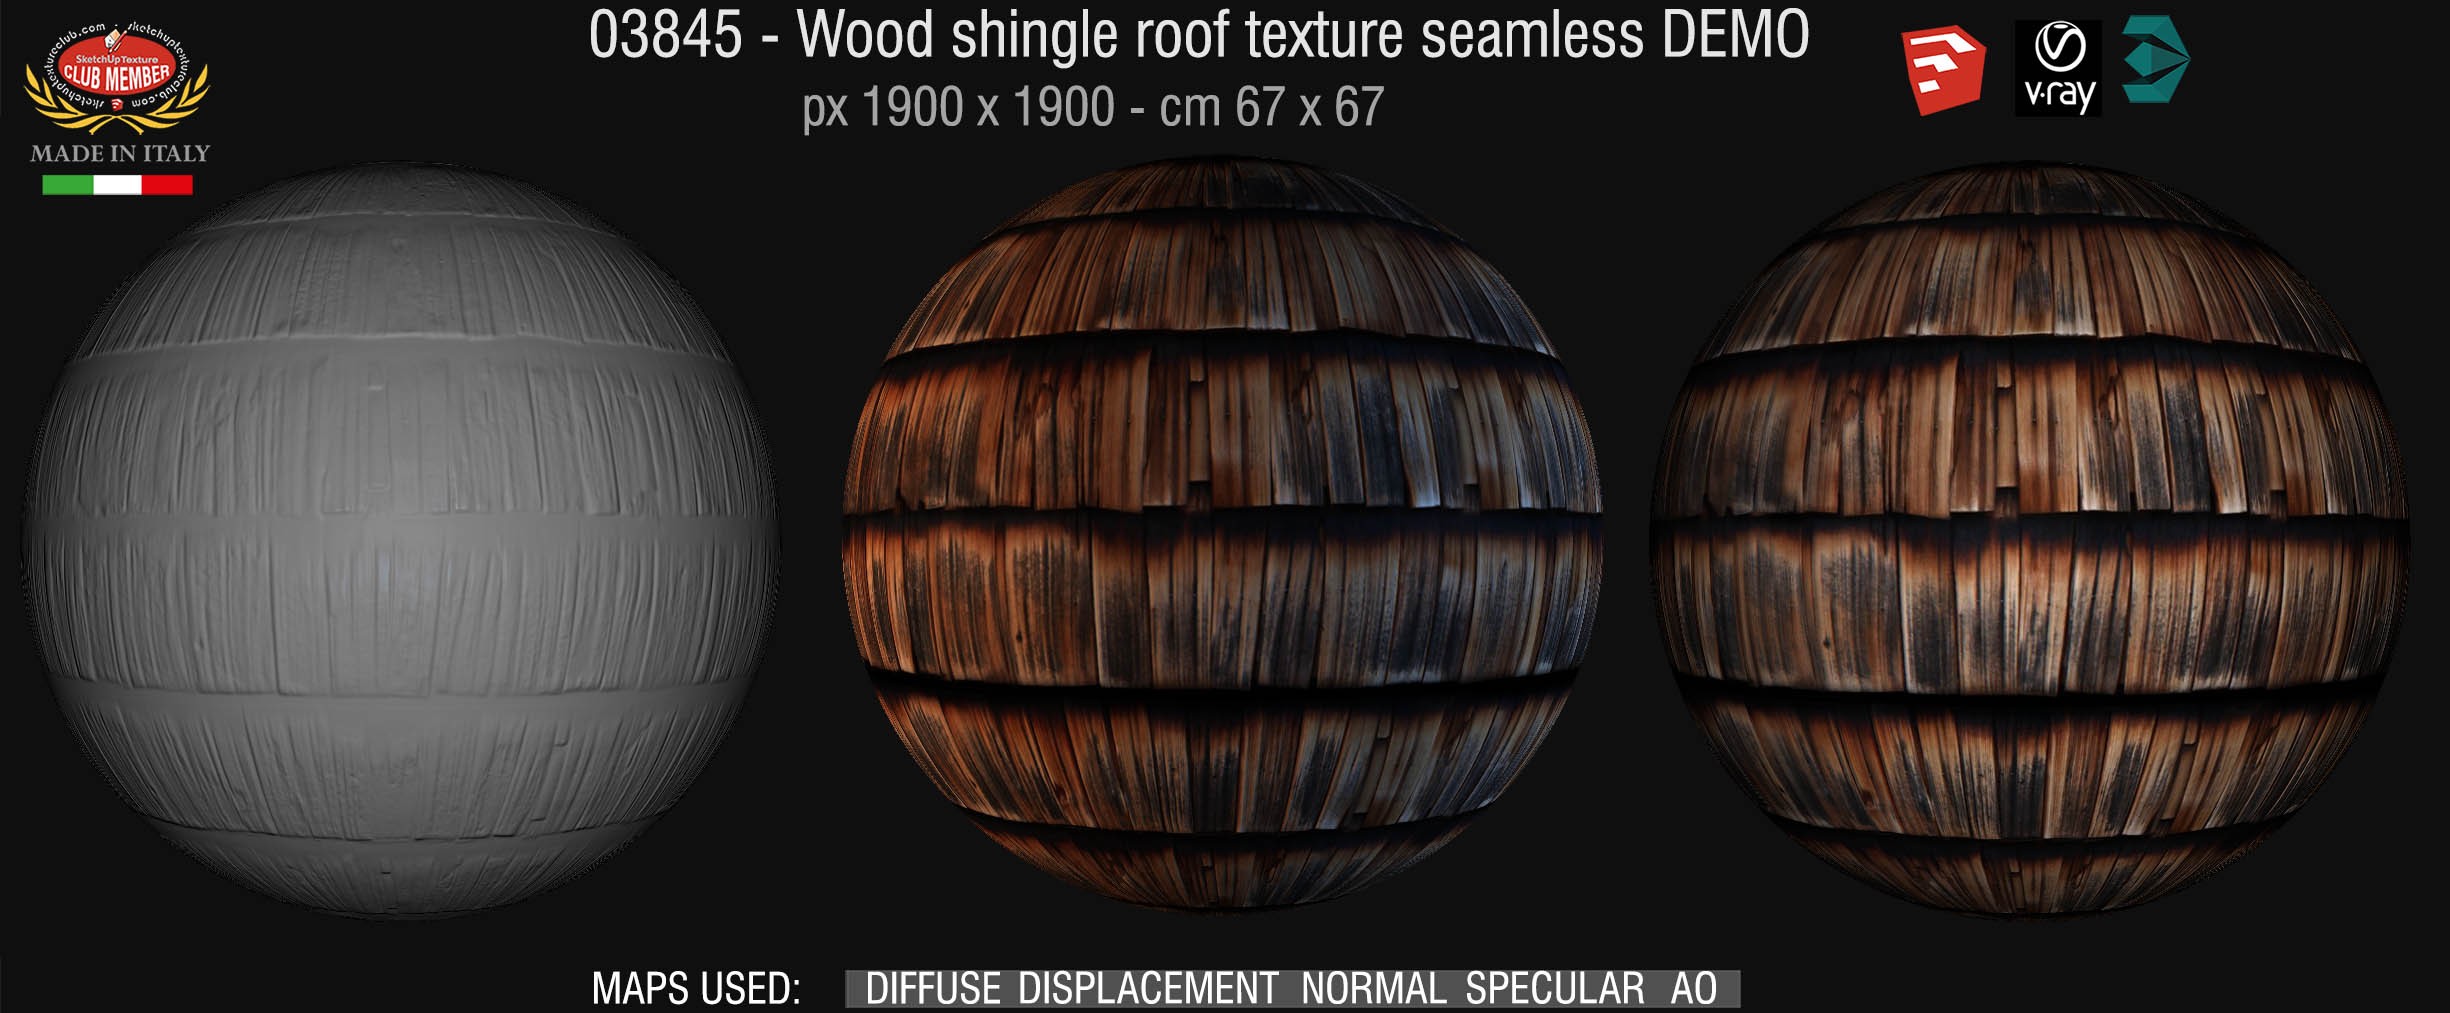 03845 Wood shingle roof texture seamless + maps DEMO